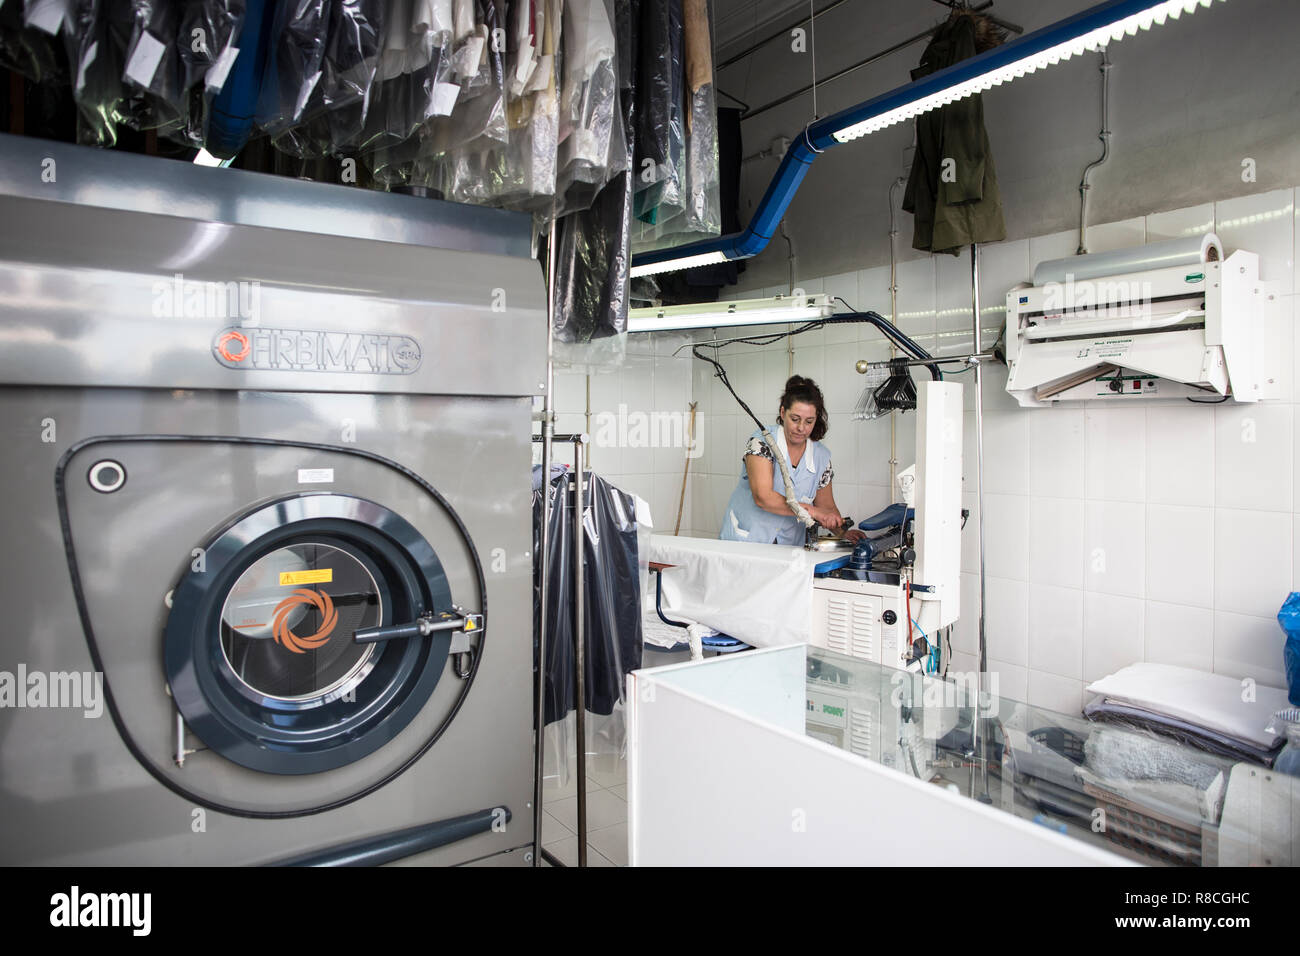 Laundrette and ironing services, R. de Entrecampos, Lisbon, Portugal Stock Photo